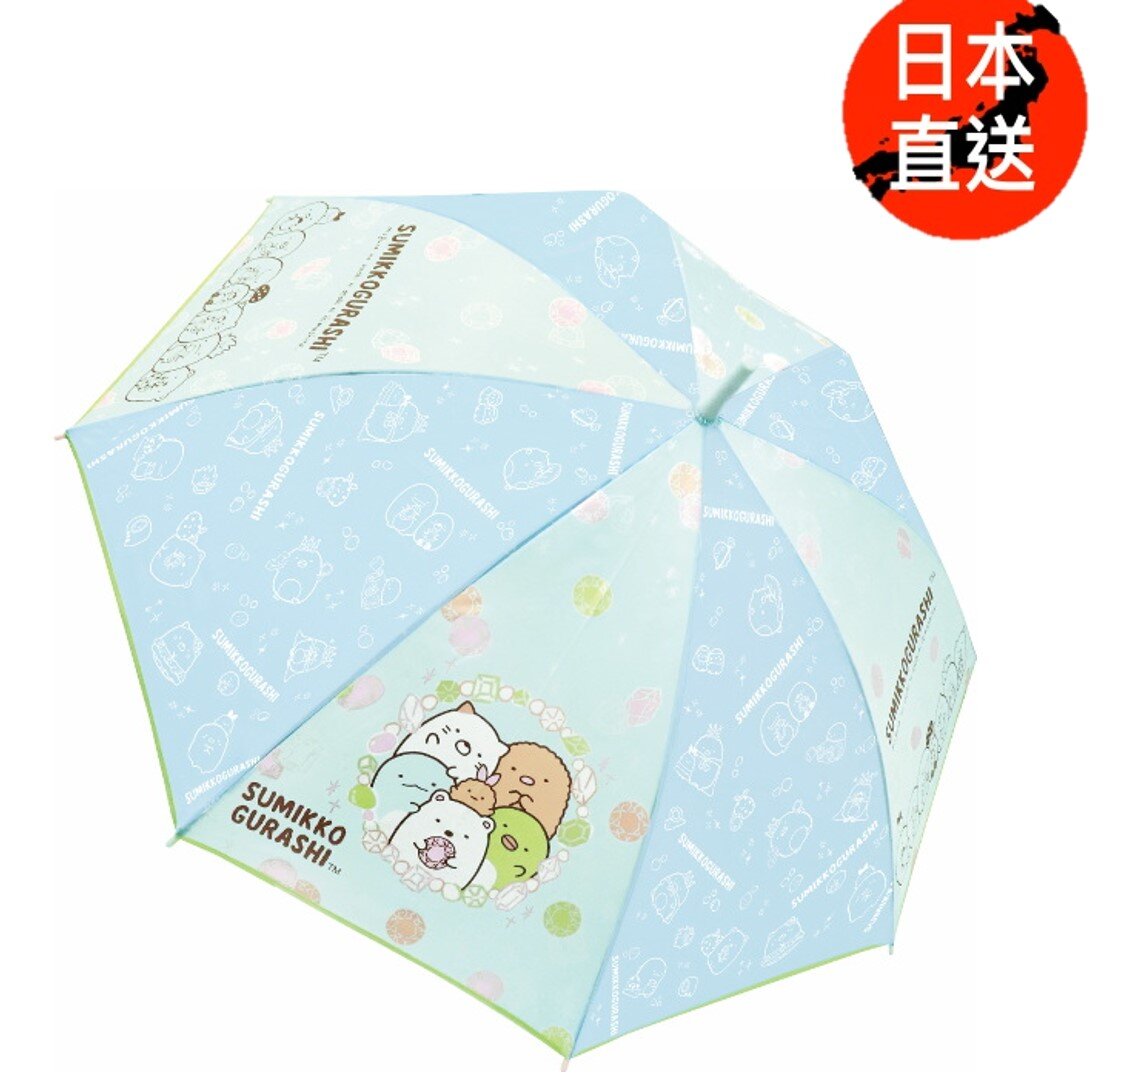 Sumiko Gurashi umbrella